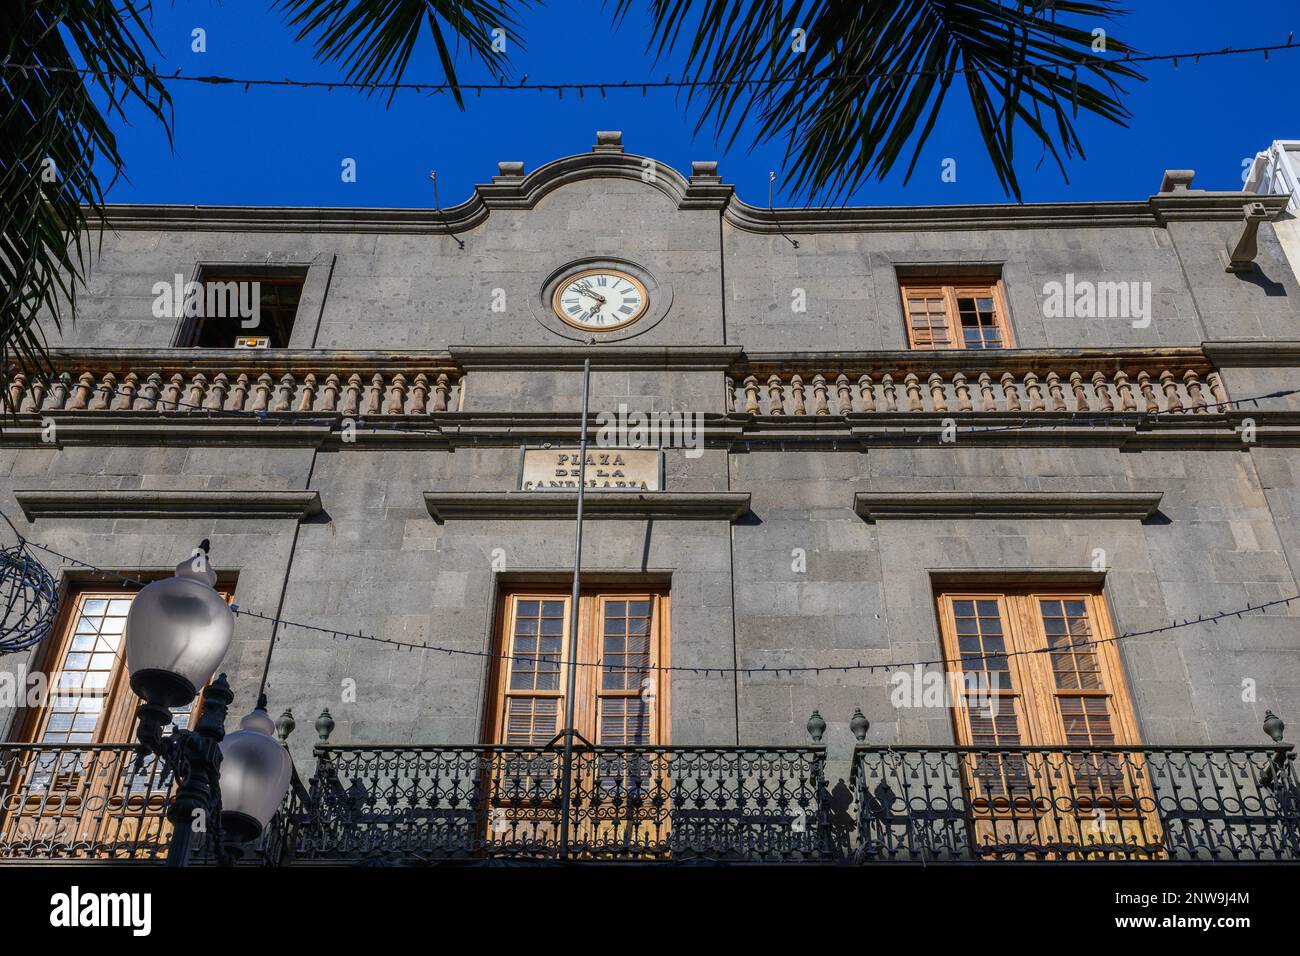 The neoclassic and the canary baroque facade of Francisco de la Pierre's  18th Century Carta Palace in Plaza de la Candelaria in Santra Cruz, Tenerife Stock Photo